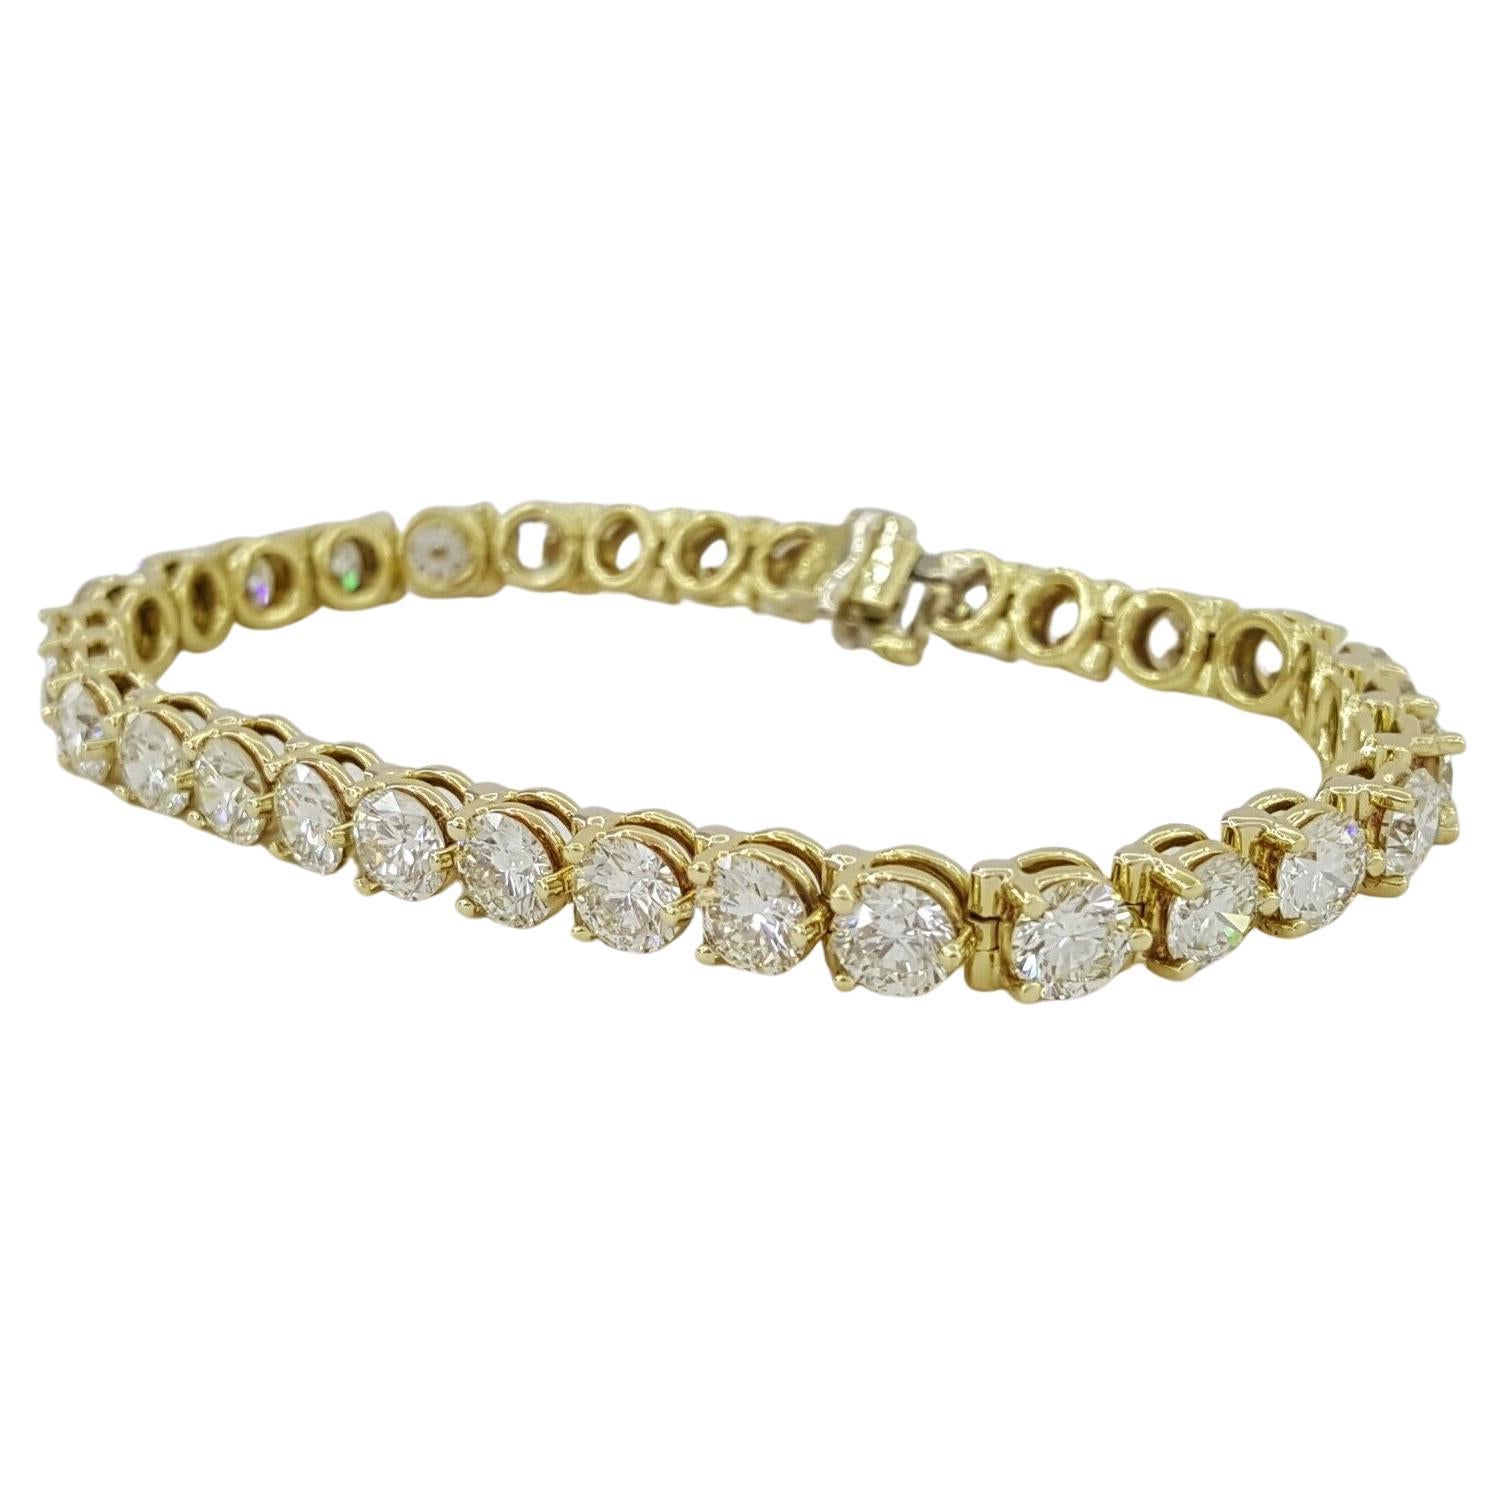 13.18 ct total weight Round Brilliant Cut Diamond 18K Yellow Gold Tennis Bracelet.

The bracelet weighs 18.2 grams, 7.1